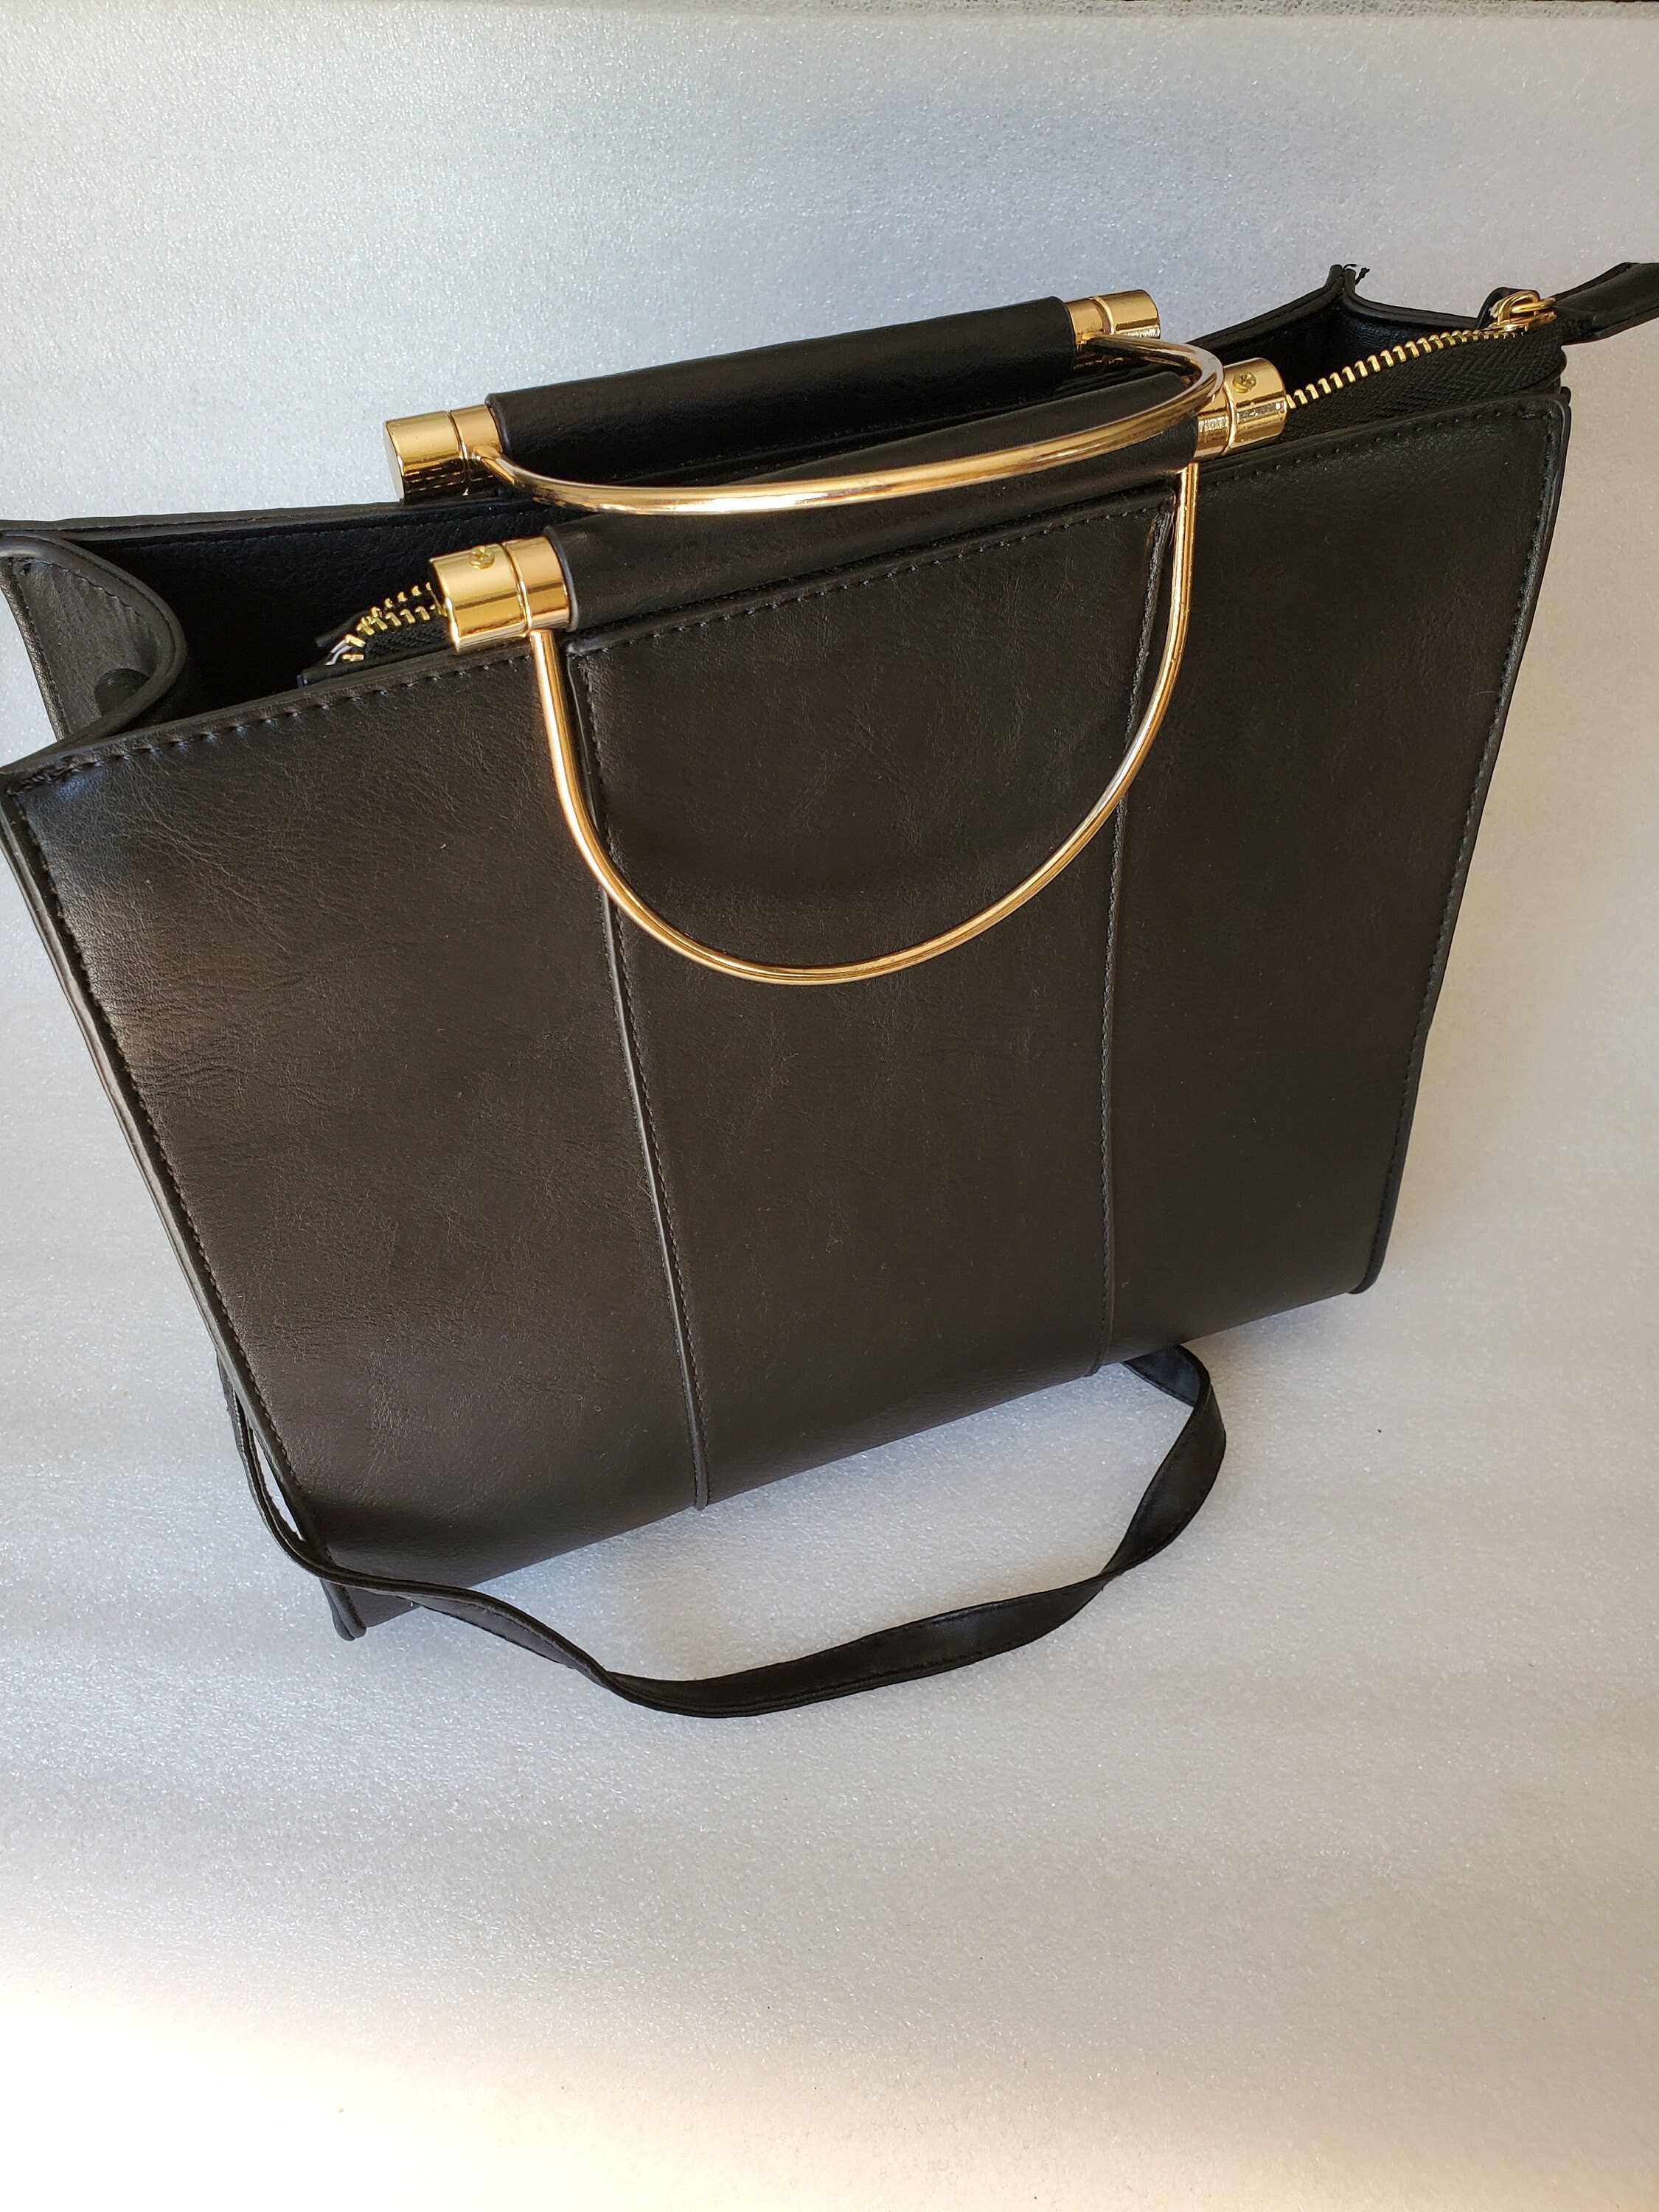 MIZTIQUE Black With Gold Metal Arm Handles Handbag With Long 